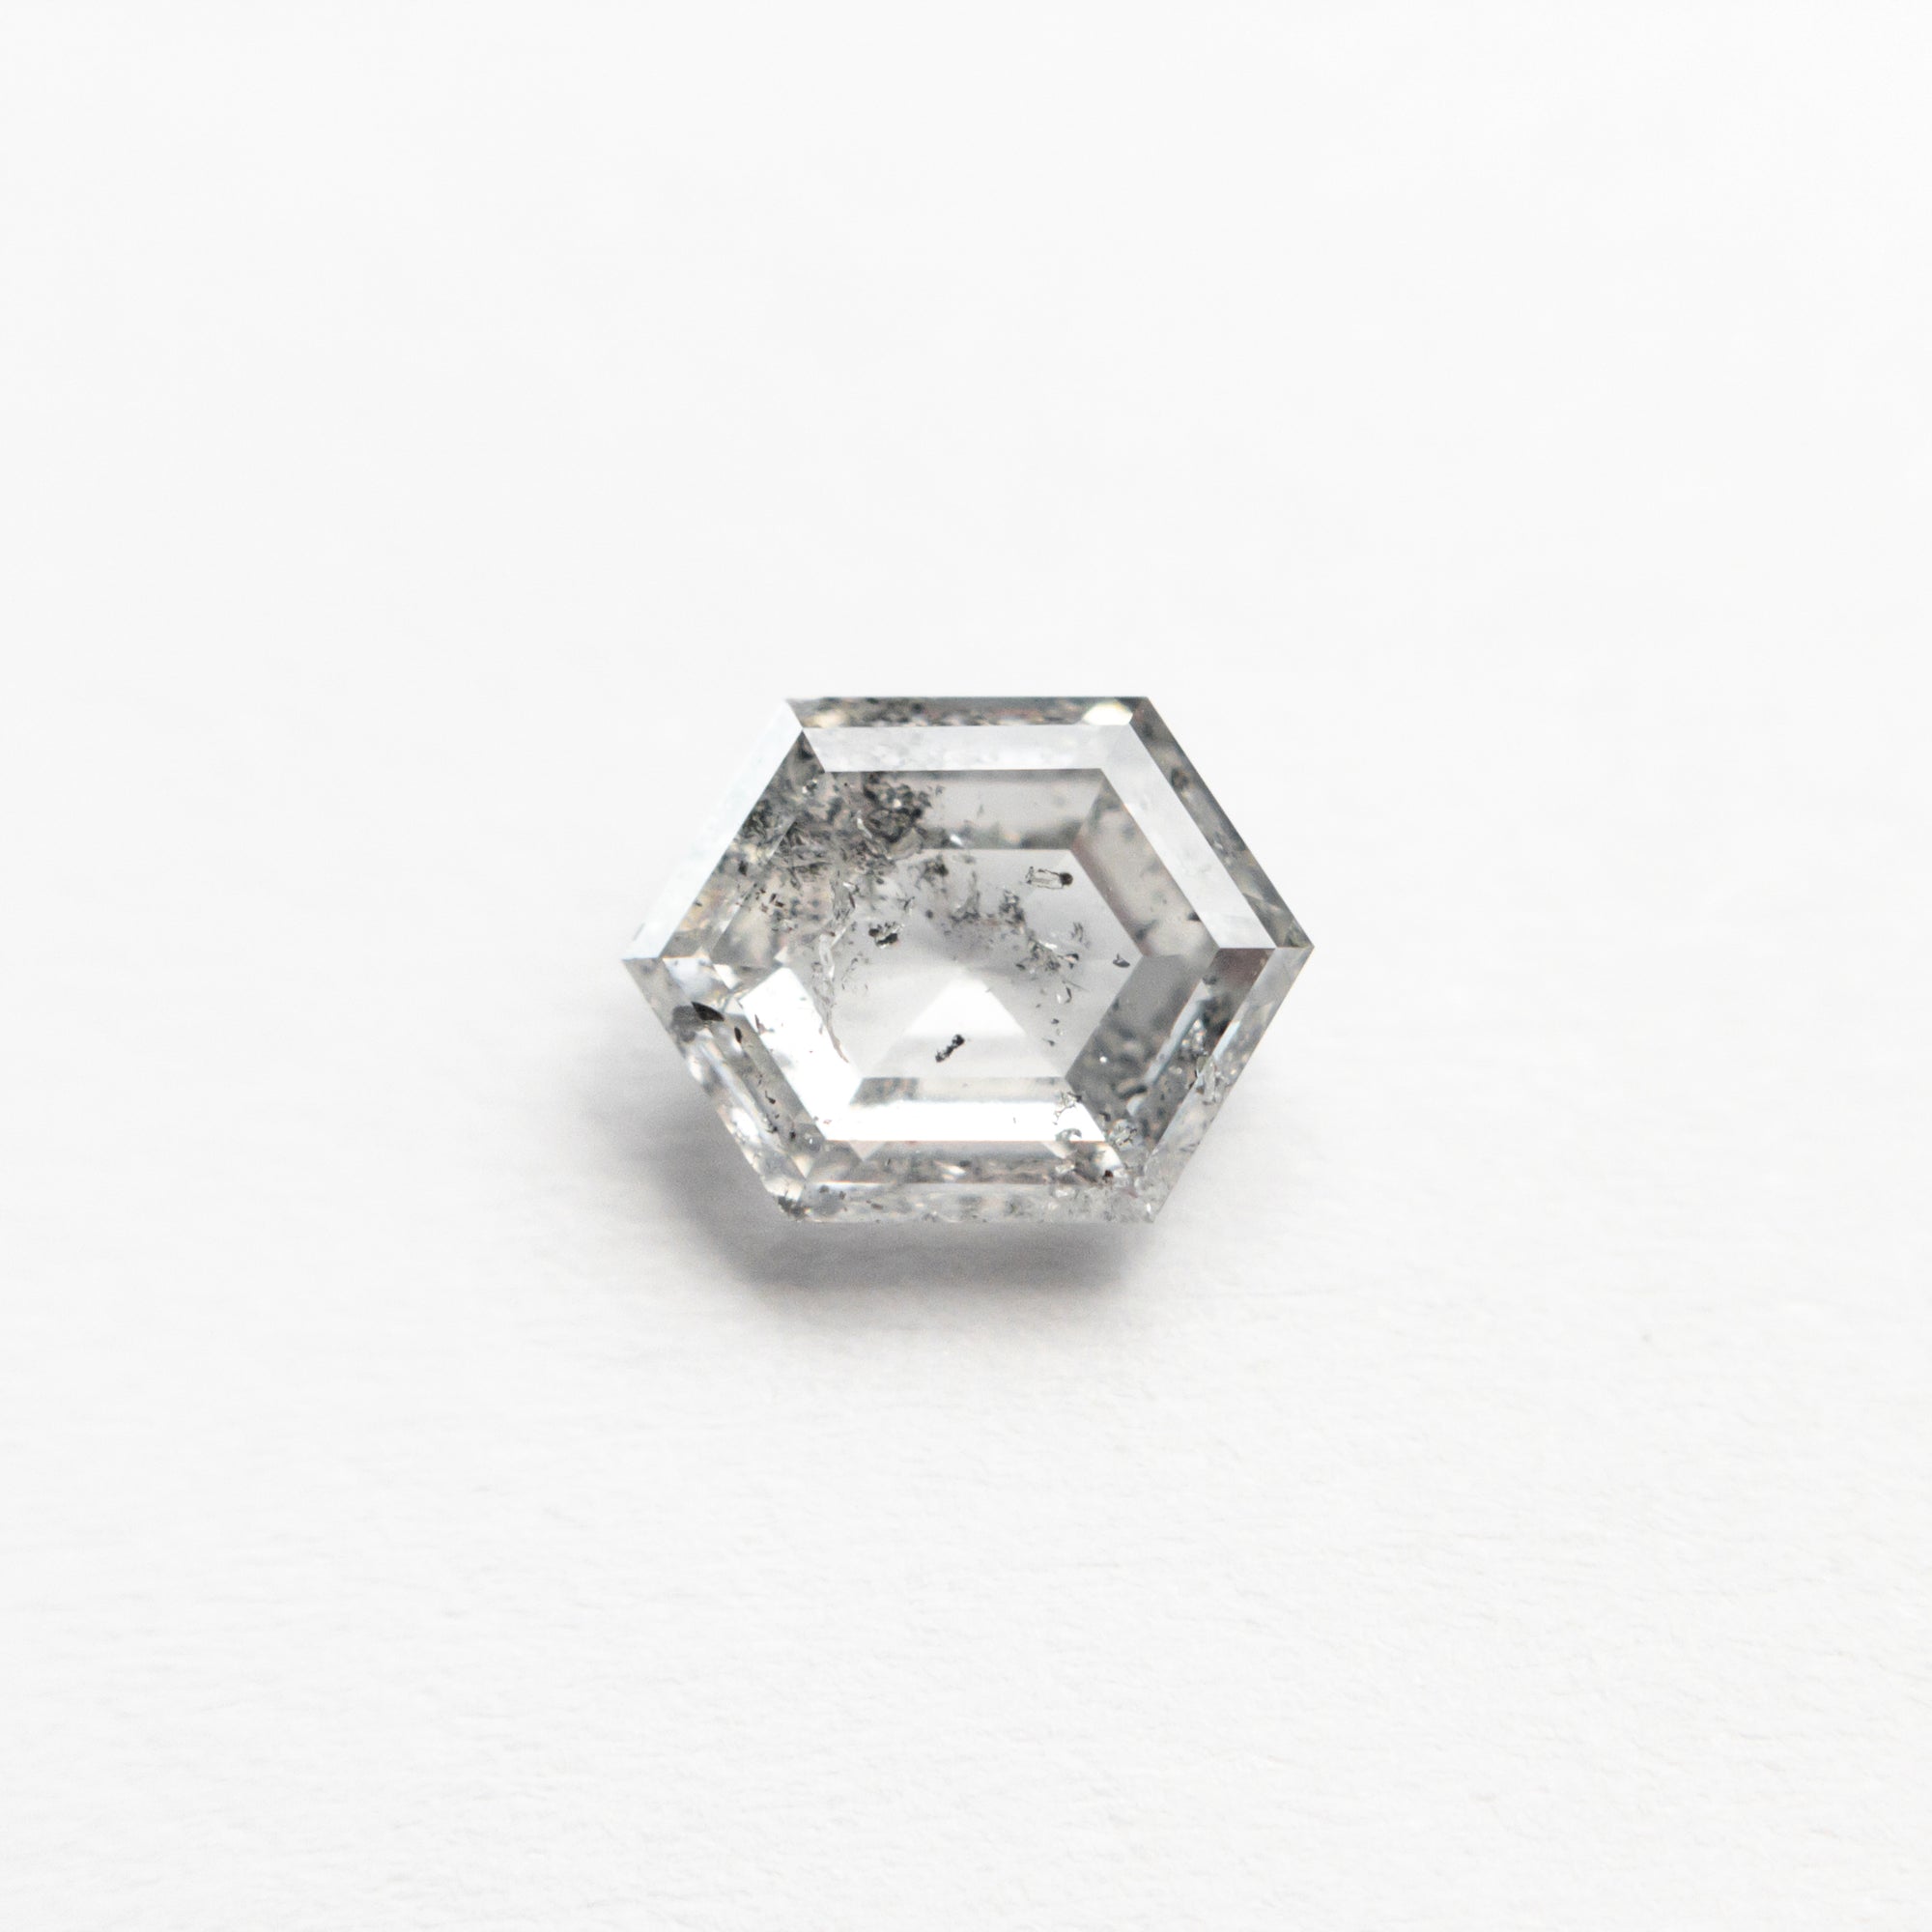 3.08ct Rough Diamond 713-55-46